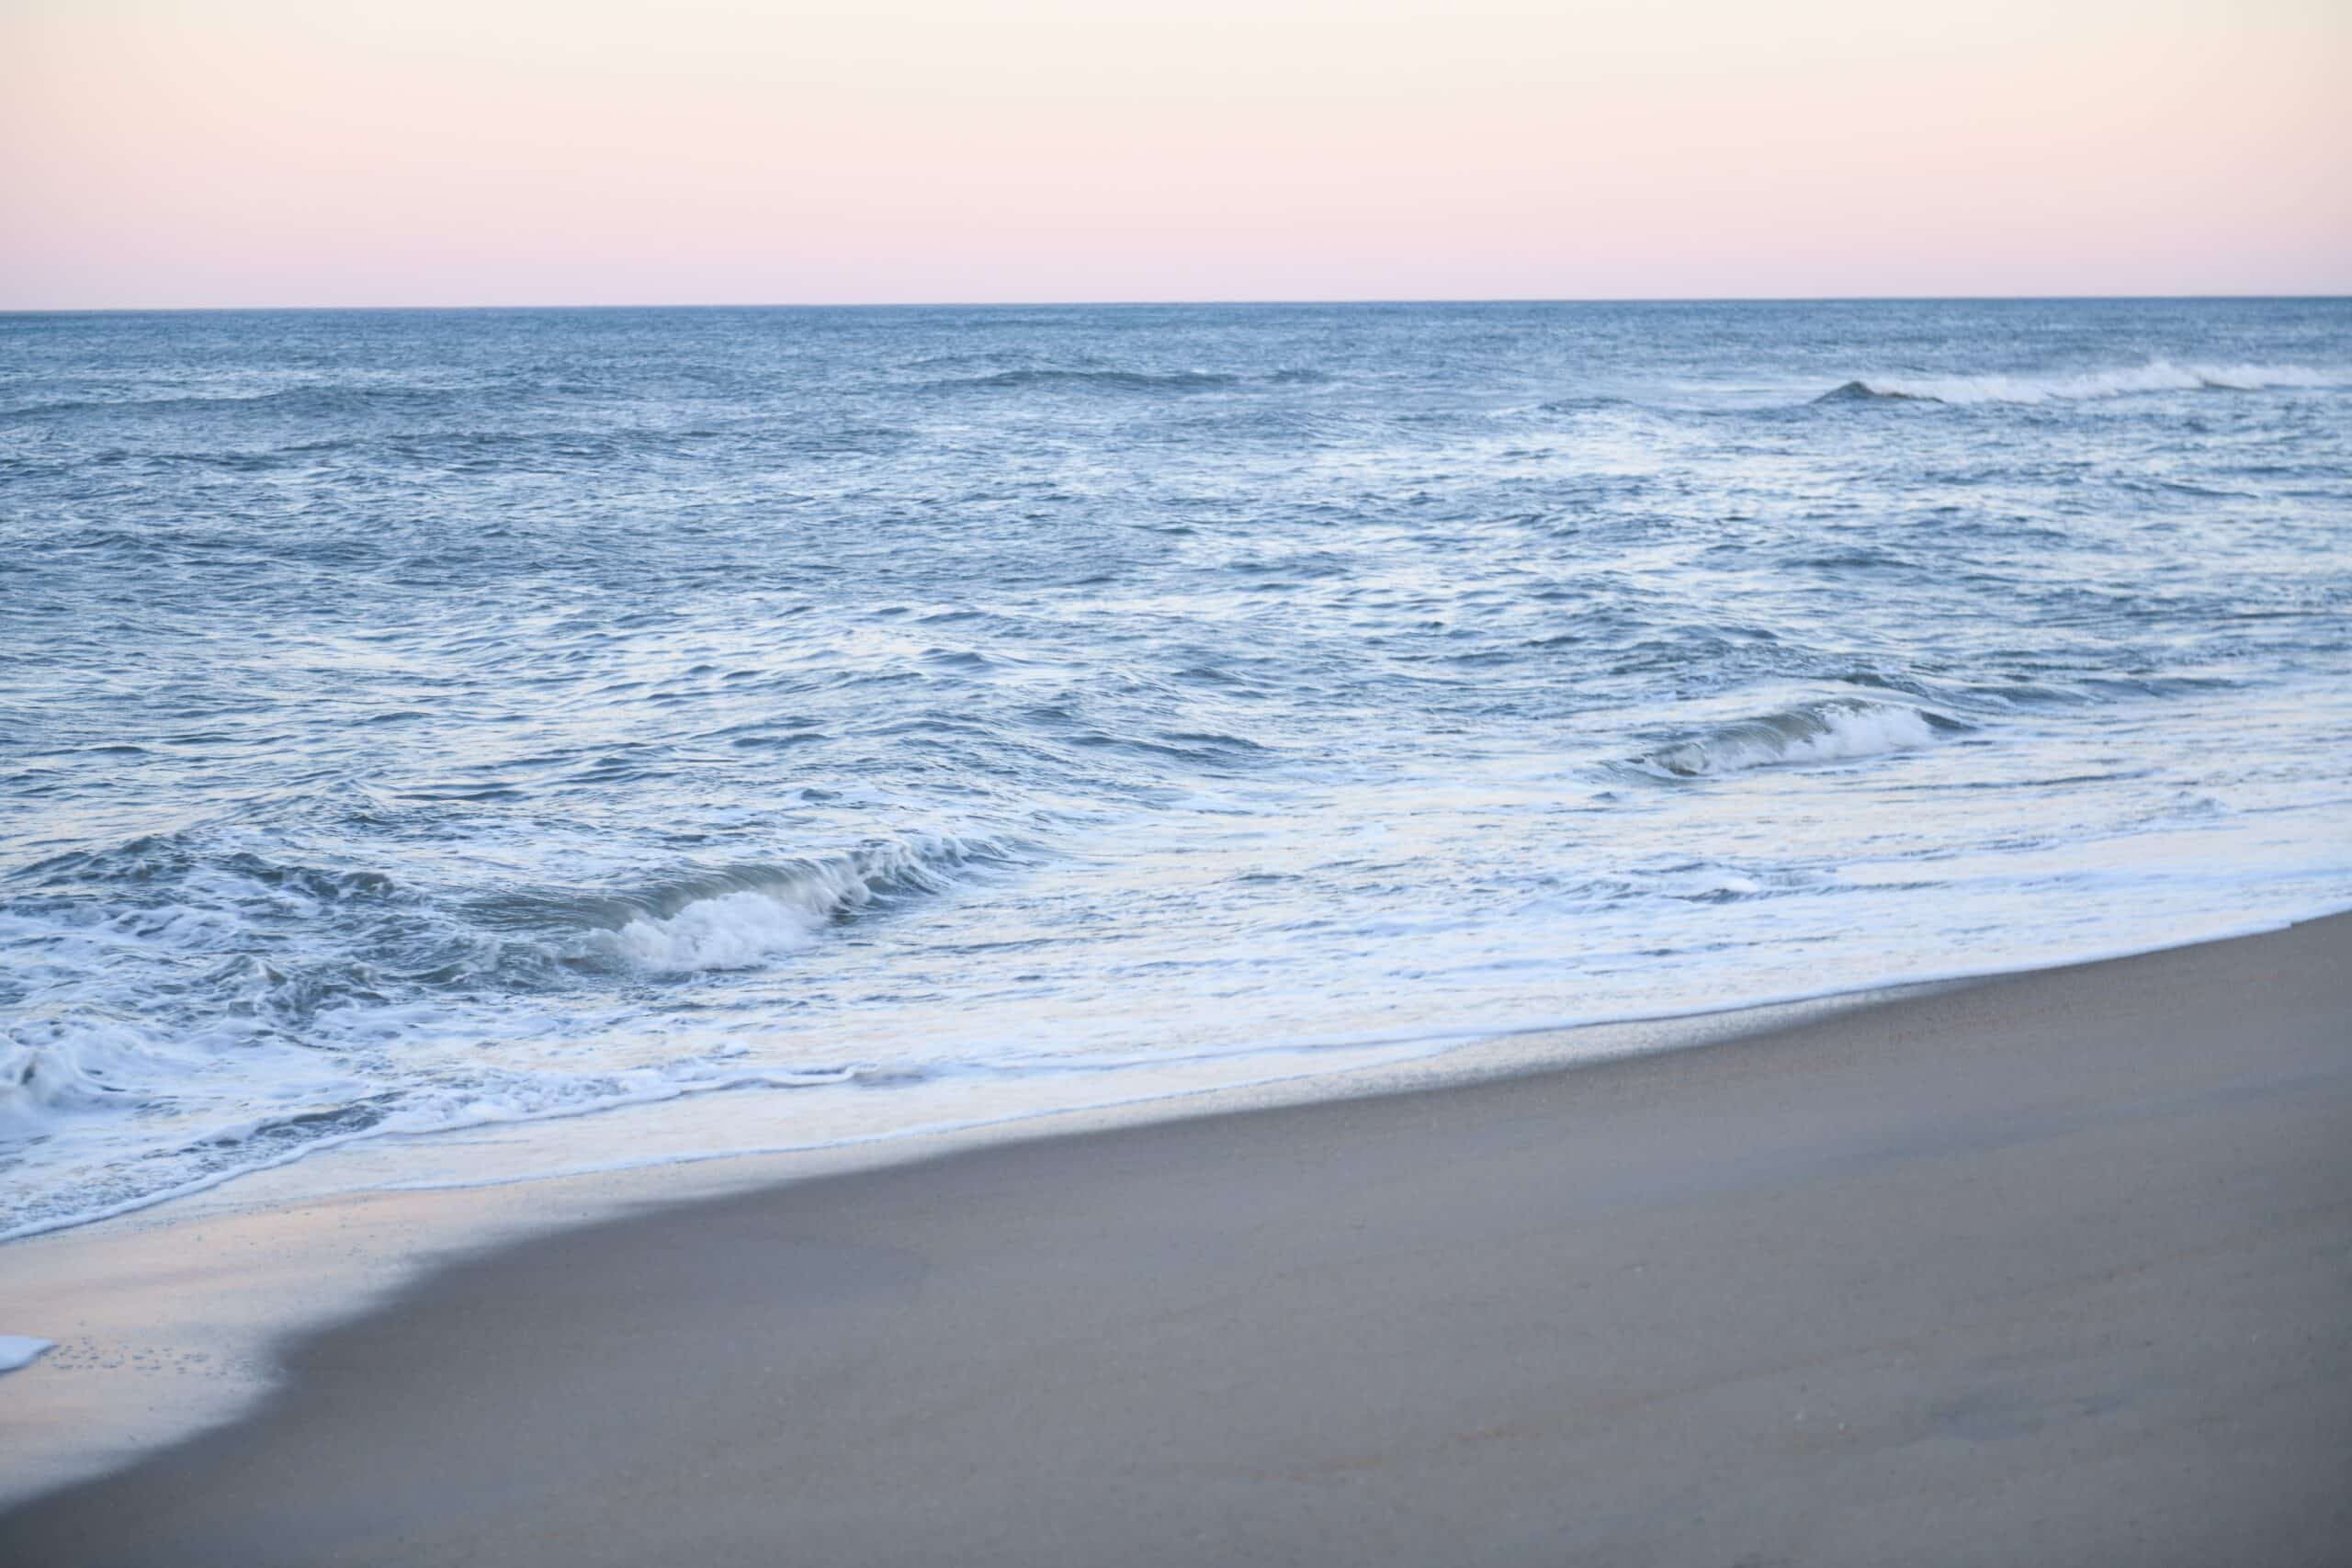 A man is standing on a sandy beach near the ocean.